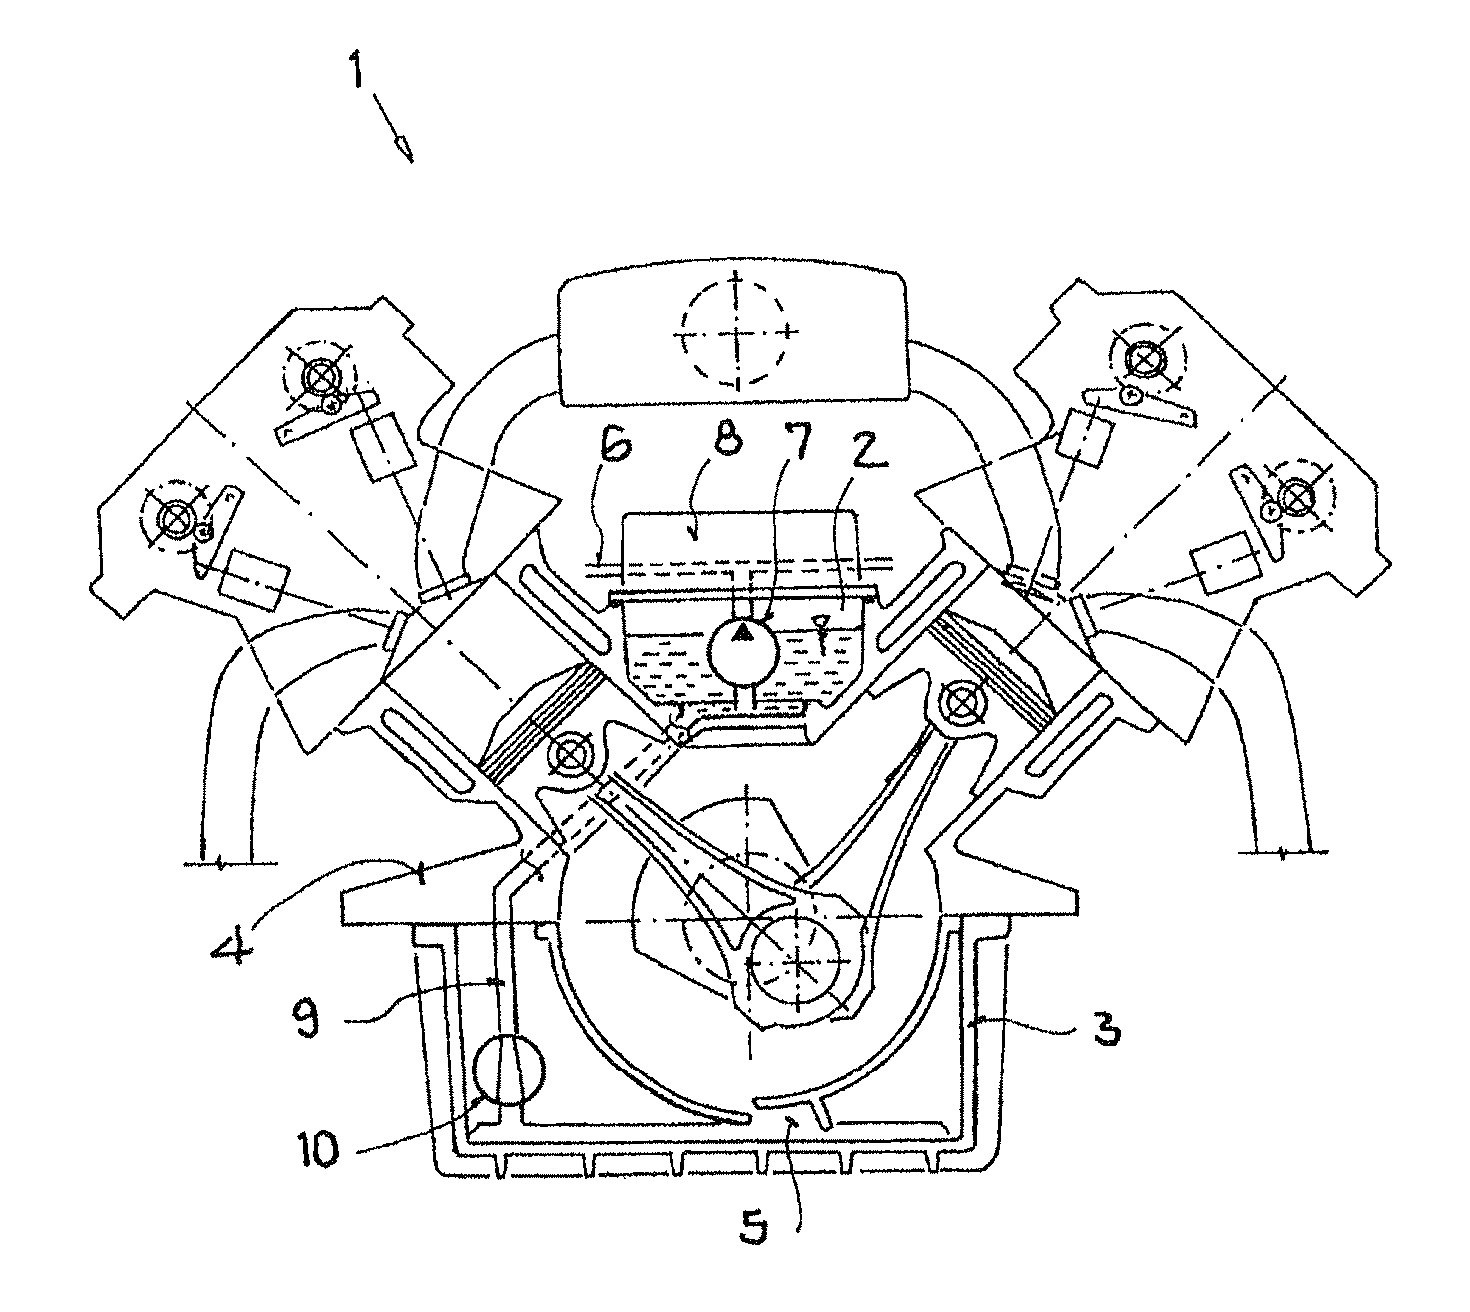 Internal combustion engine having a cylinder crankcase and a V-shaped cylinder configuration